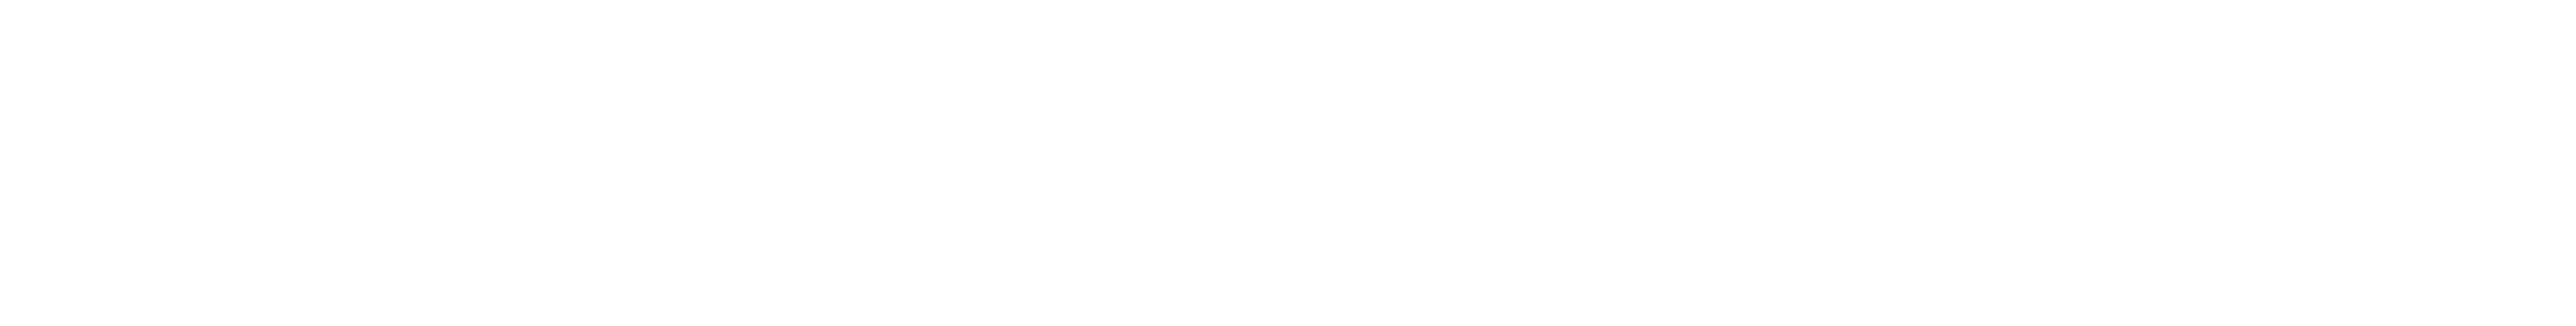 European Journal of Health Communication 